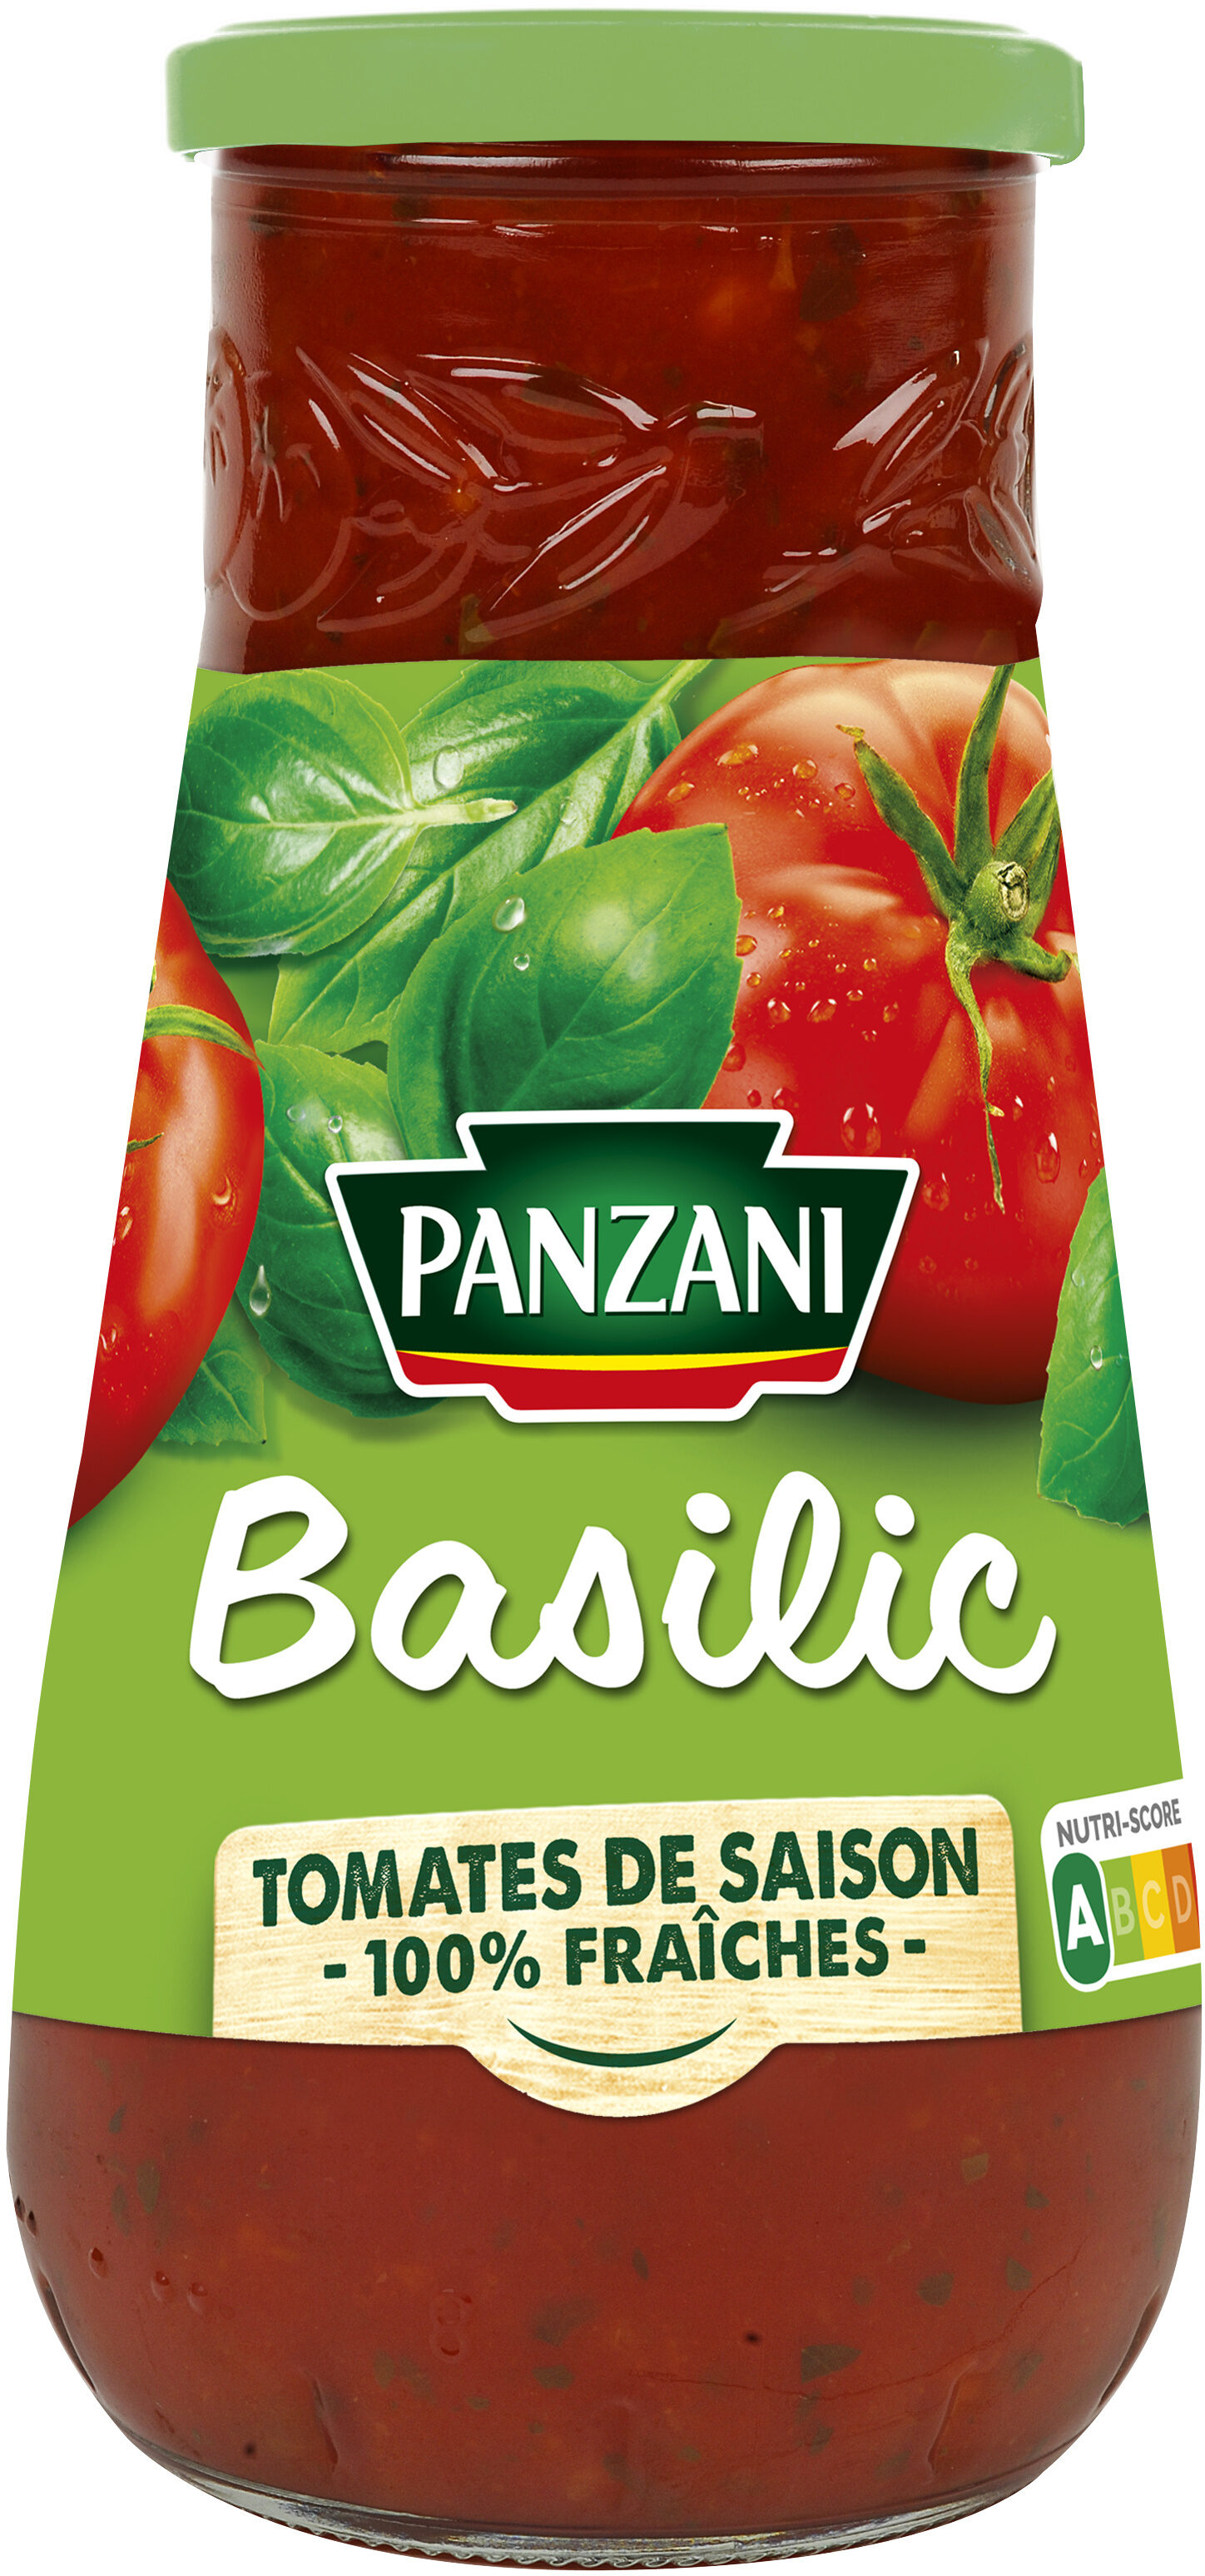 Panzani - spf - sauce tomates & basilic - Product - fr